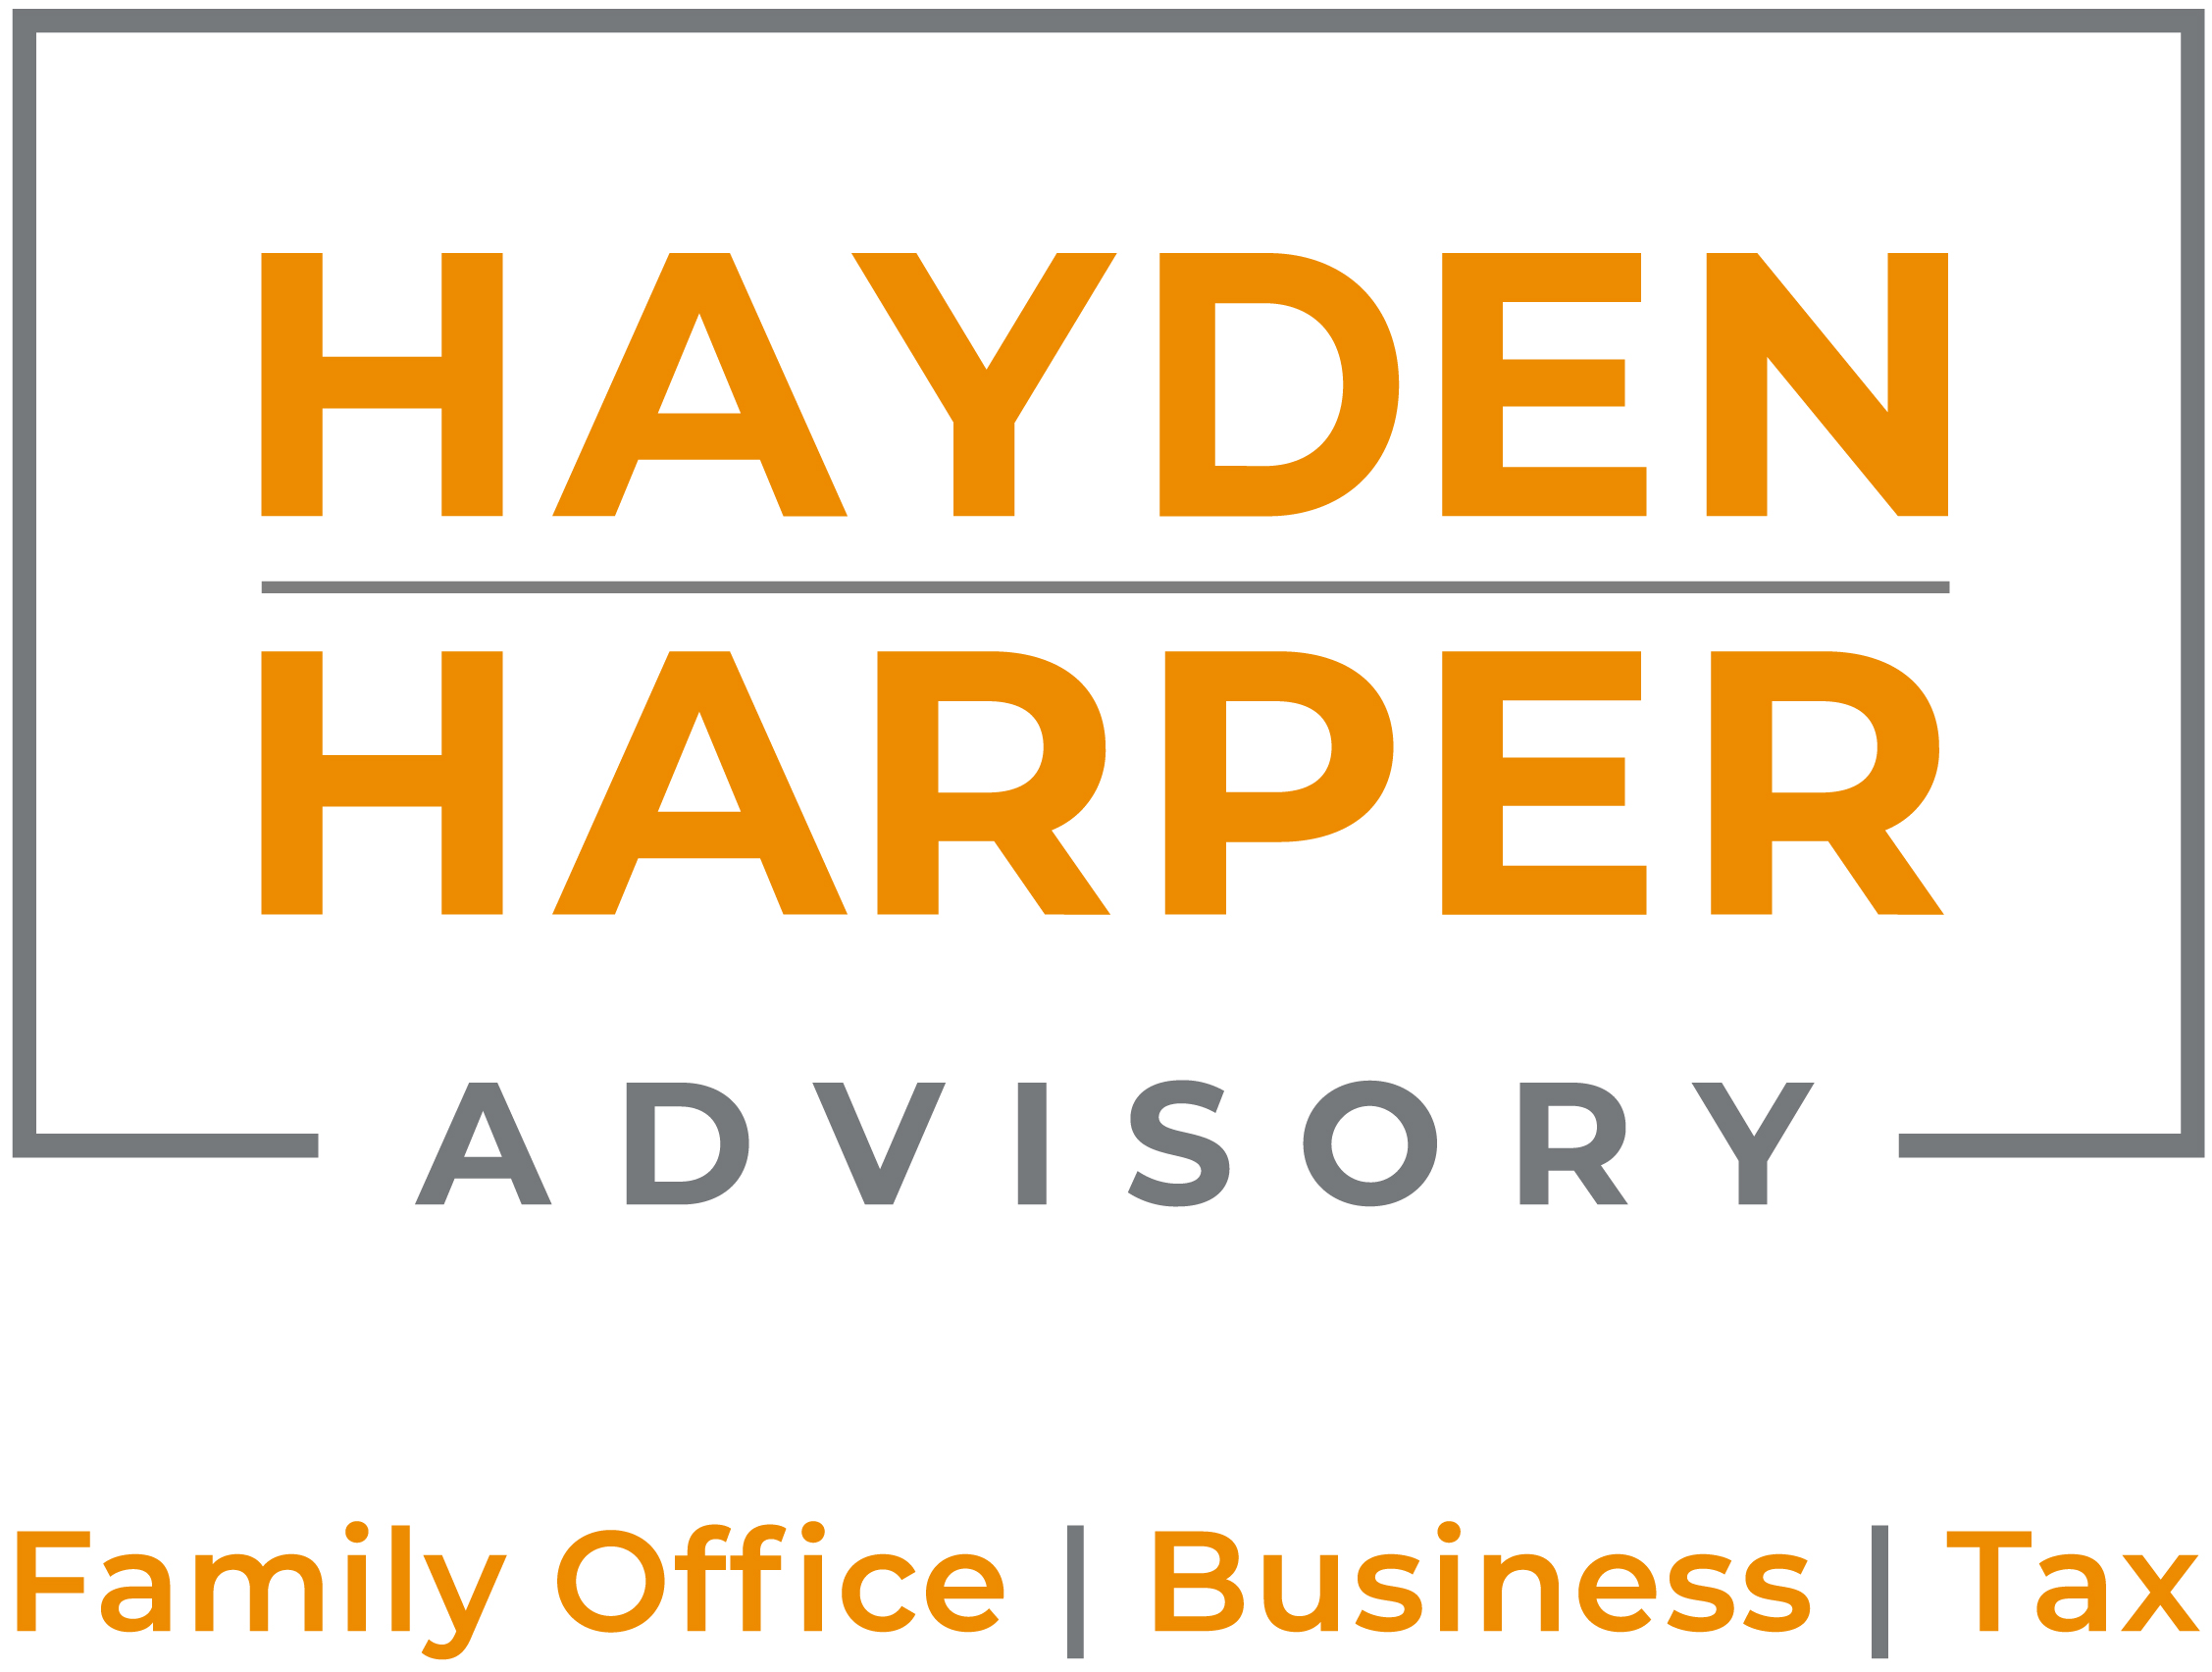 Hayden Harper Advisory